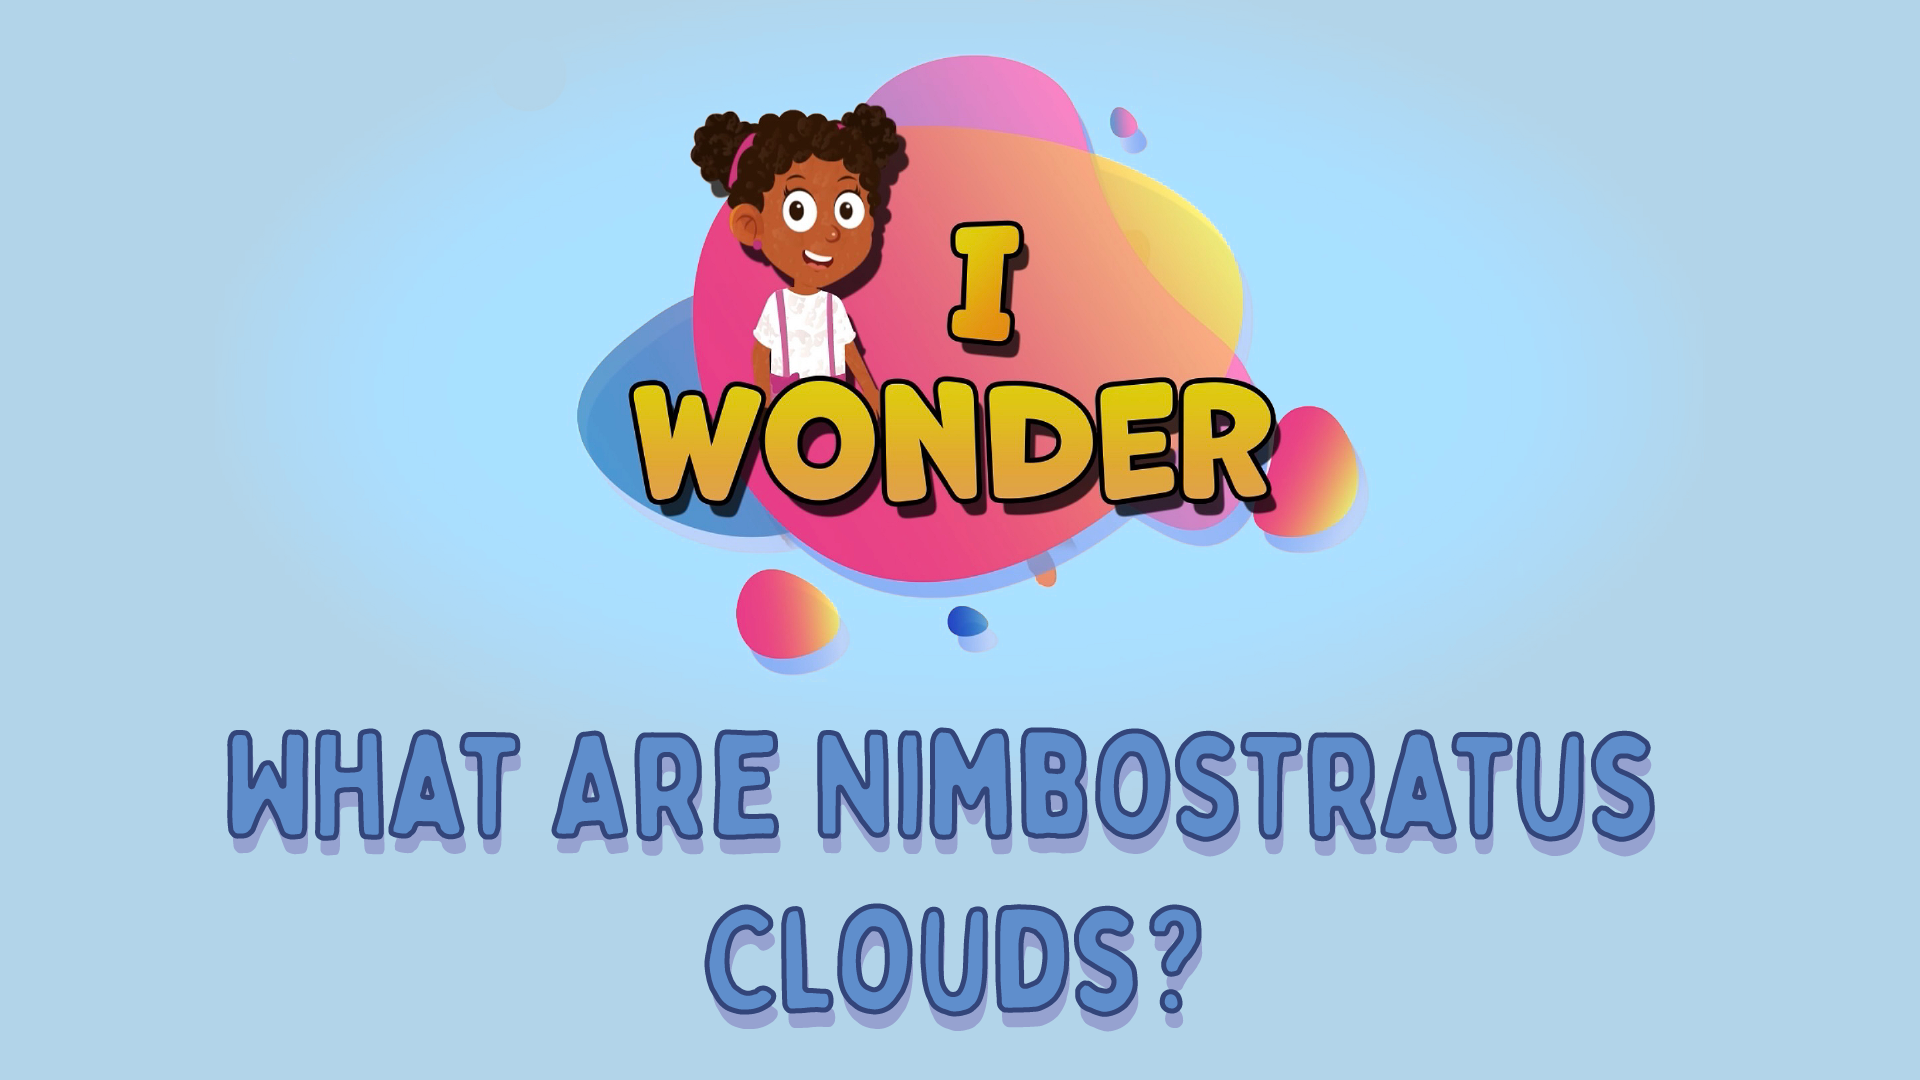 What Are Nimbostratus Clouds?